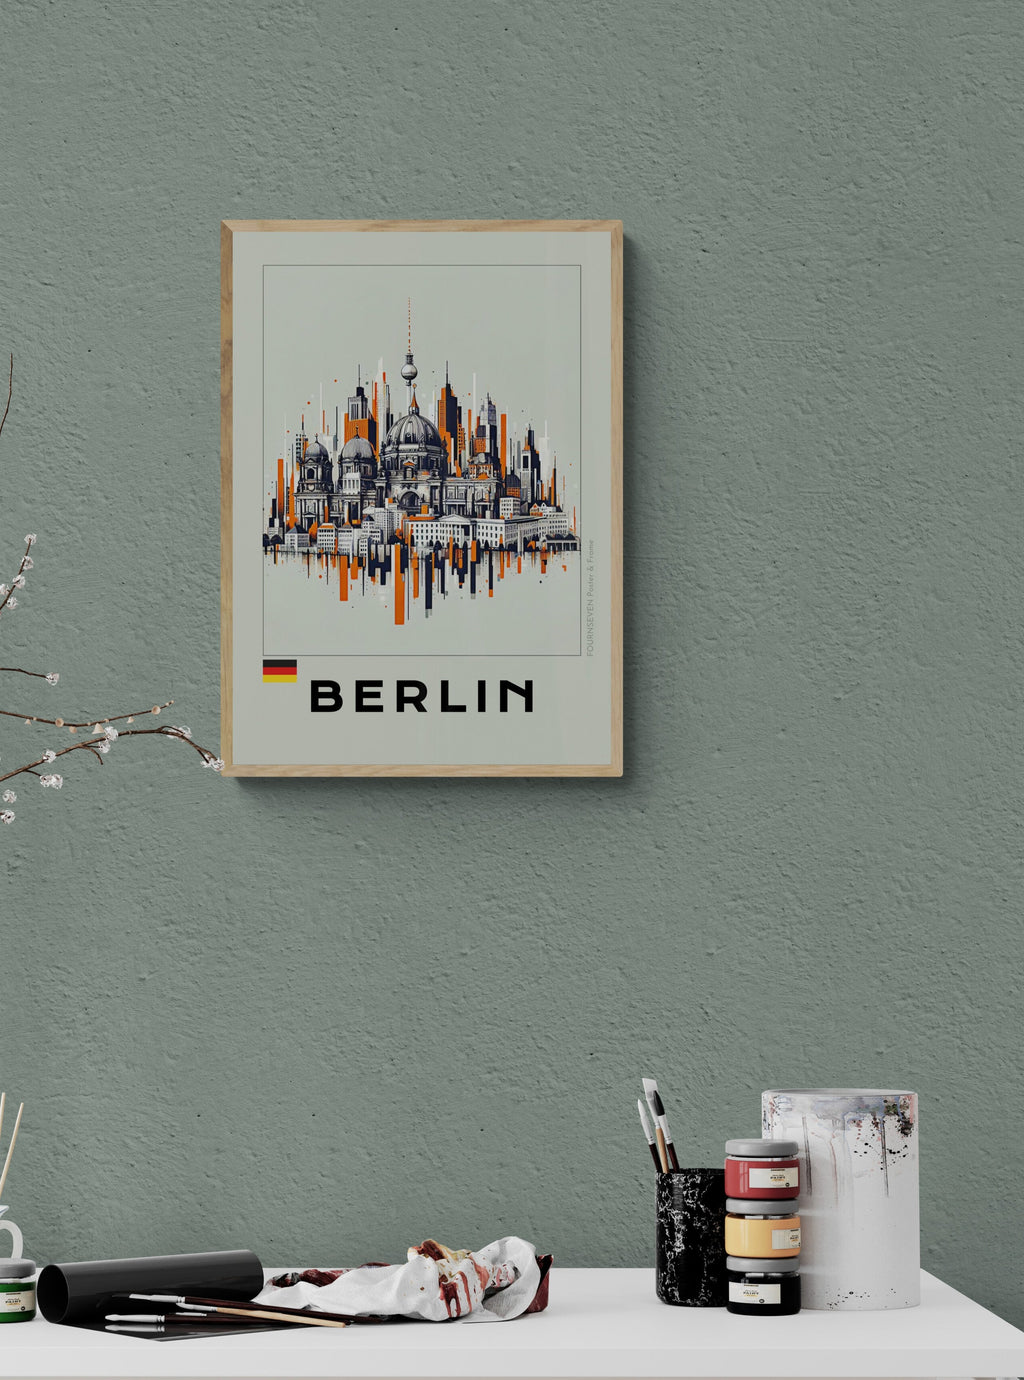 Berlin digital abstract artwork poster.